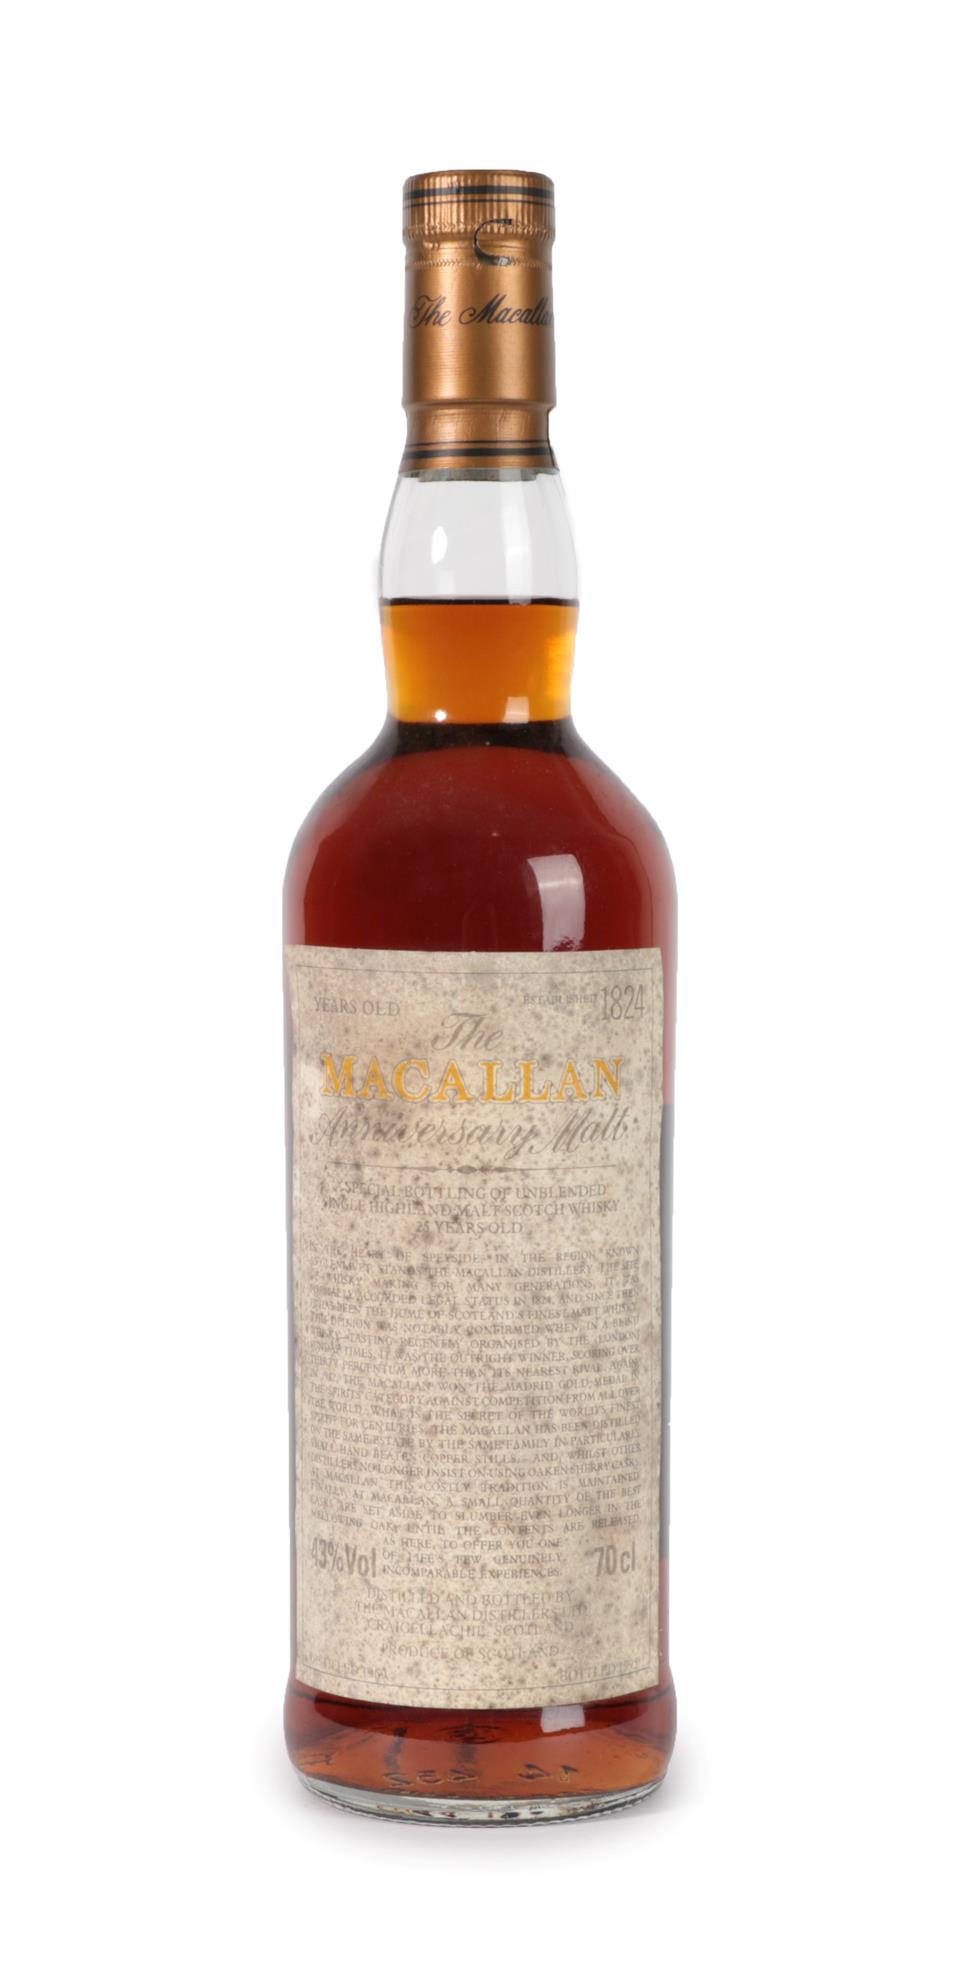 The Macallan 25 Years Old Anniversary Malt, Single Highland Malt Scotch Whisky, distilled 1969,